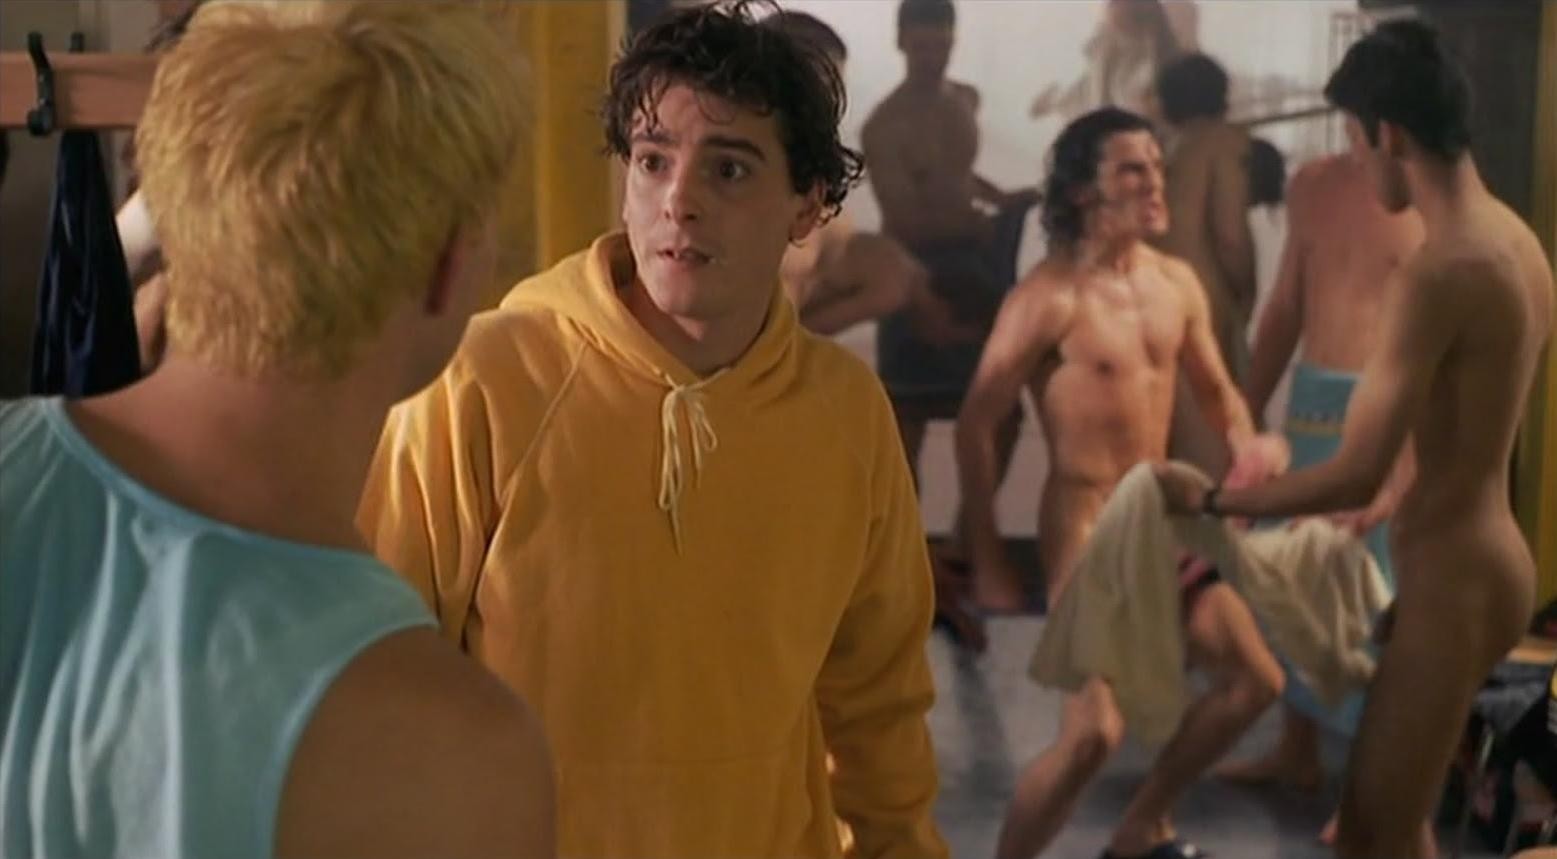 Kieran O'Brien nudo in "Virtual sexuality" (1999) .